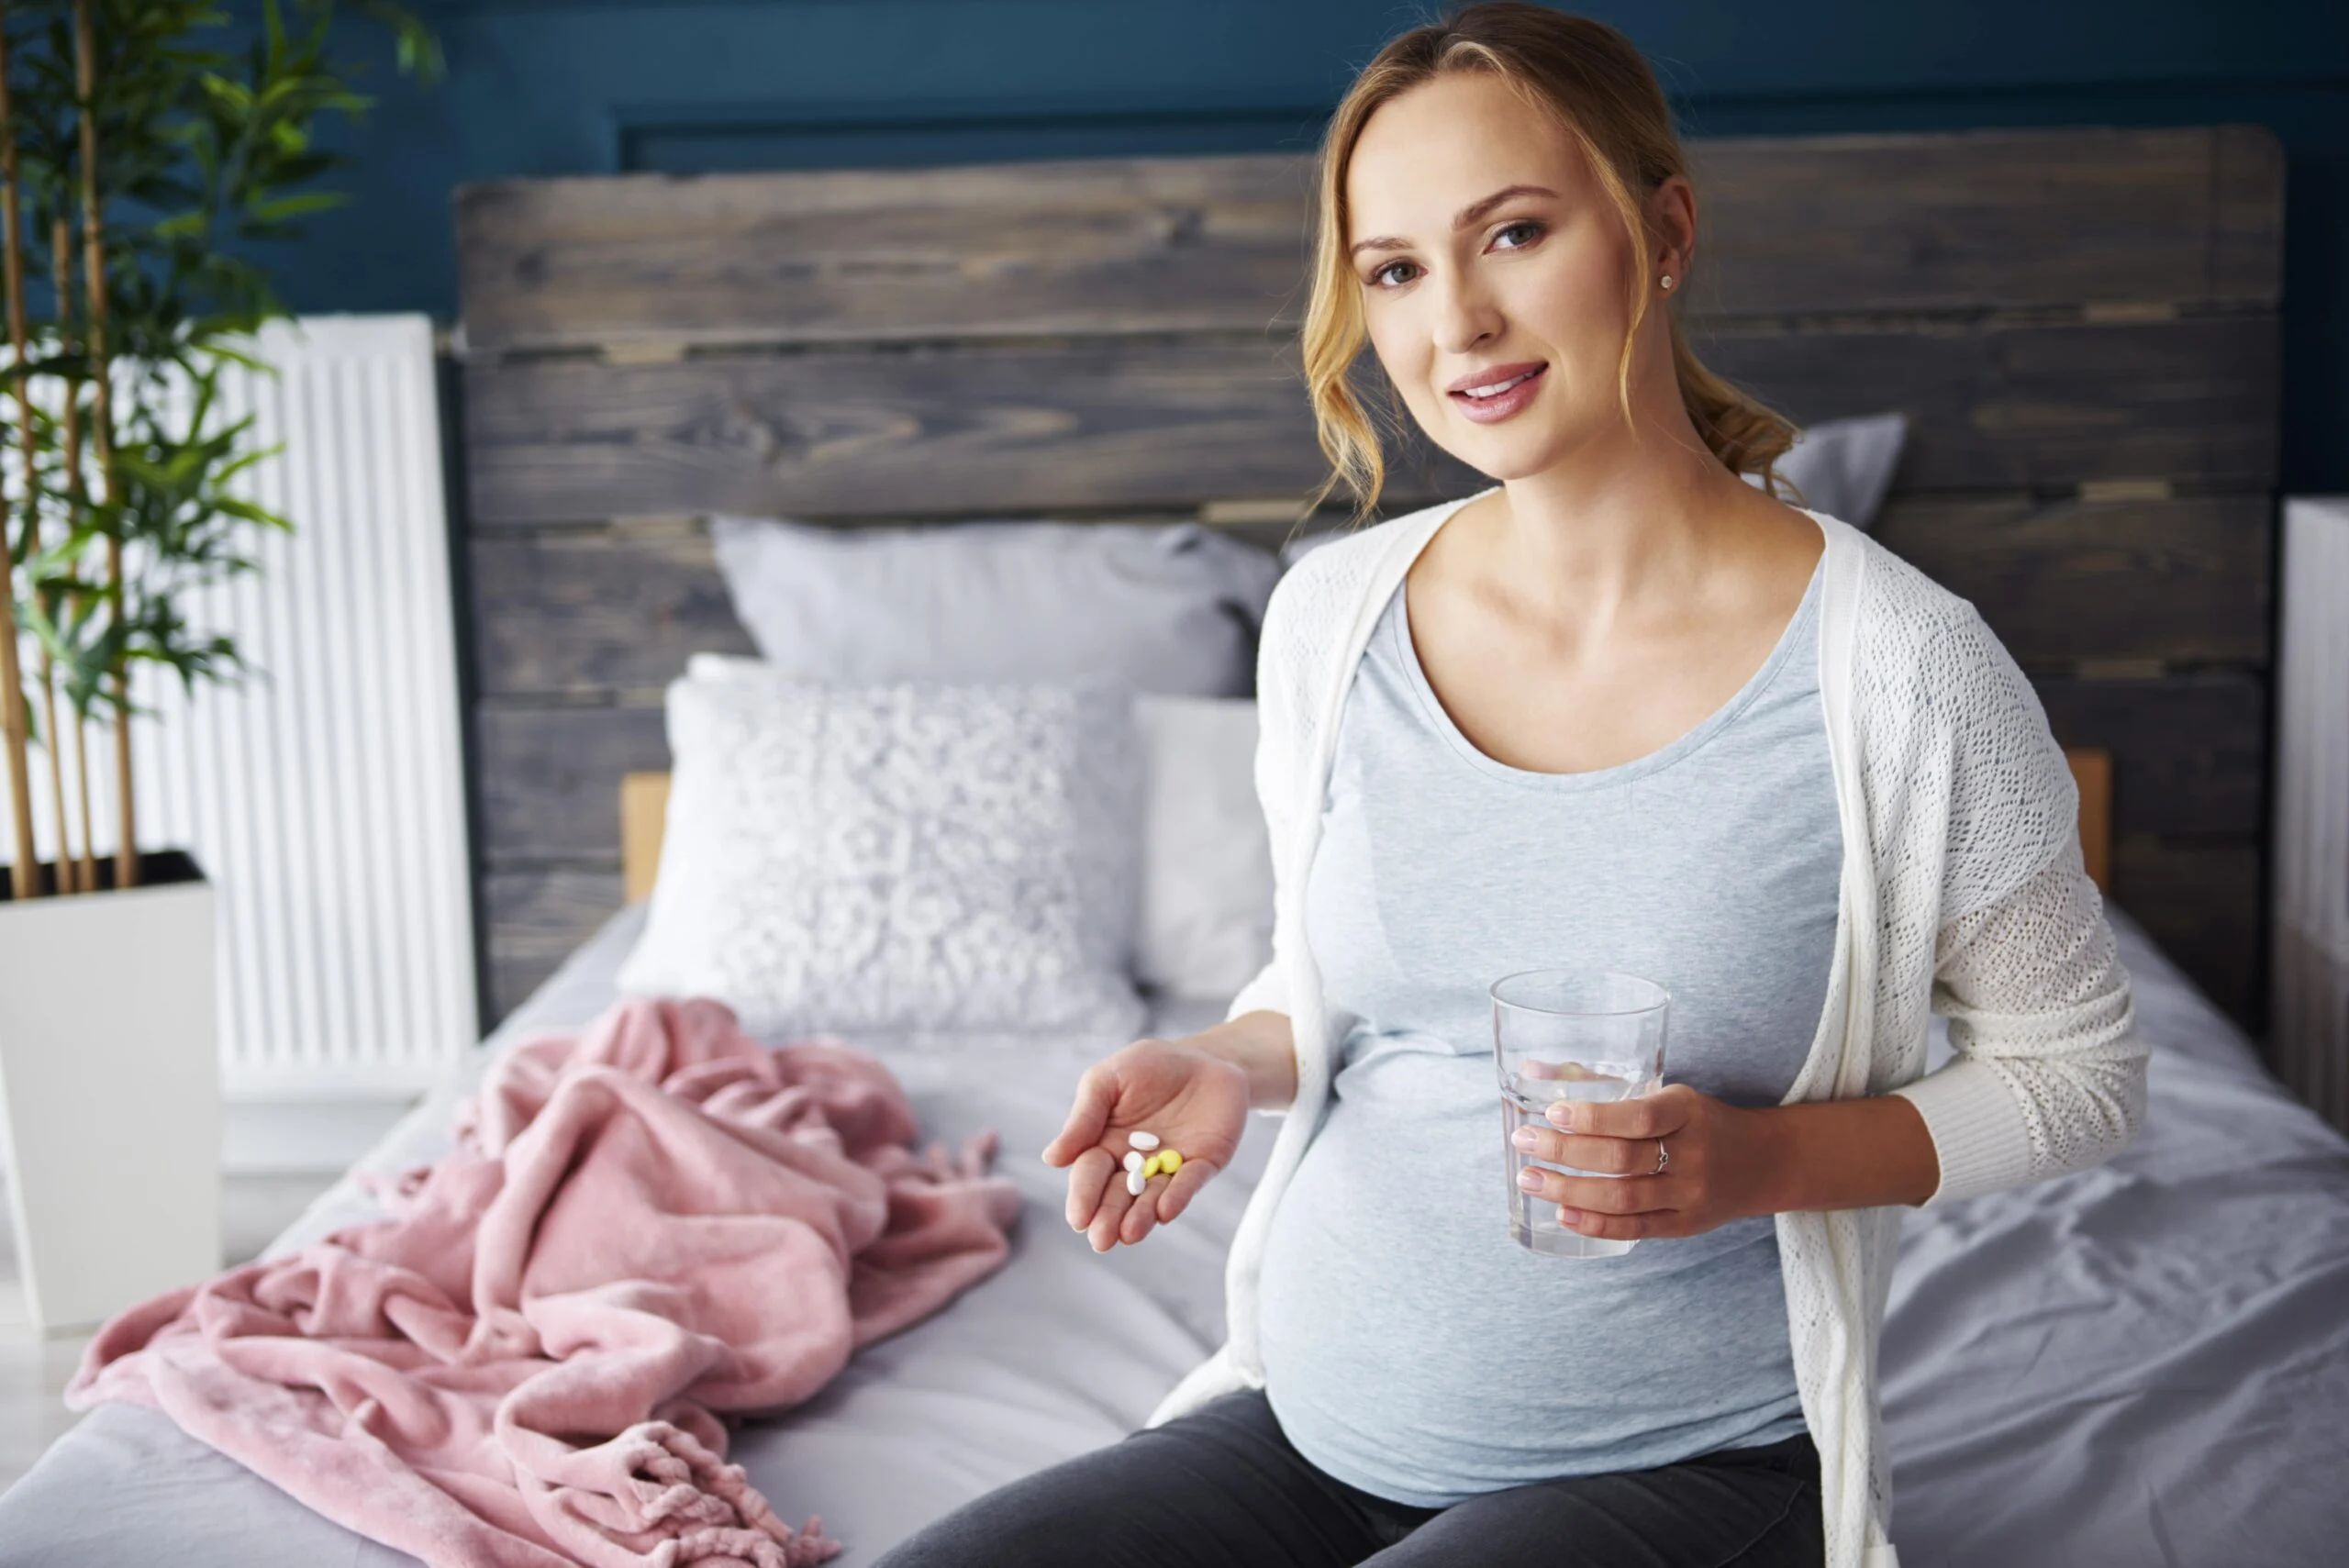 What Happens if You Don’t Take Prenatal Vitamins While Pregnant